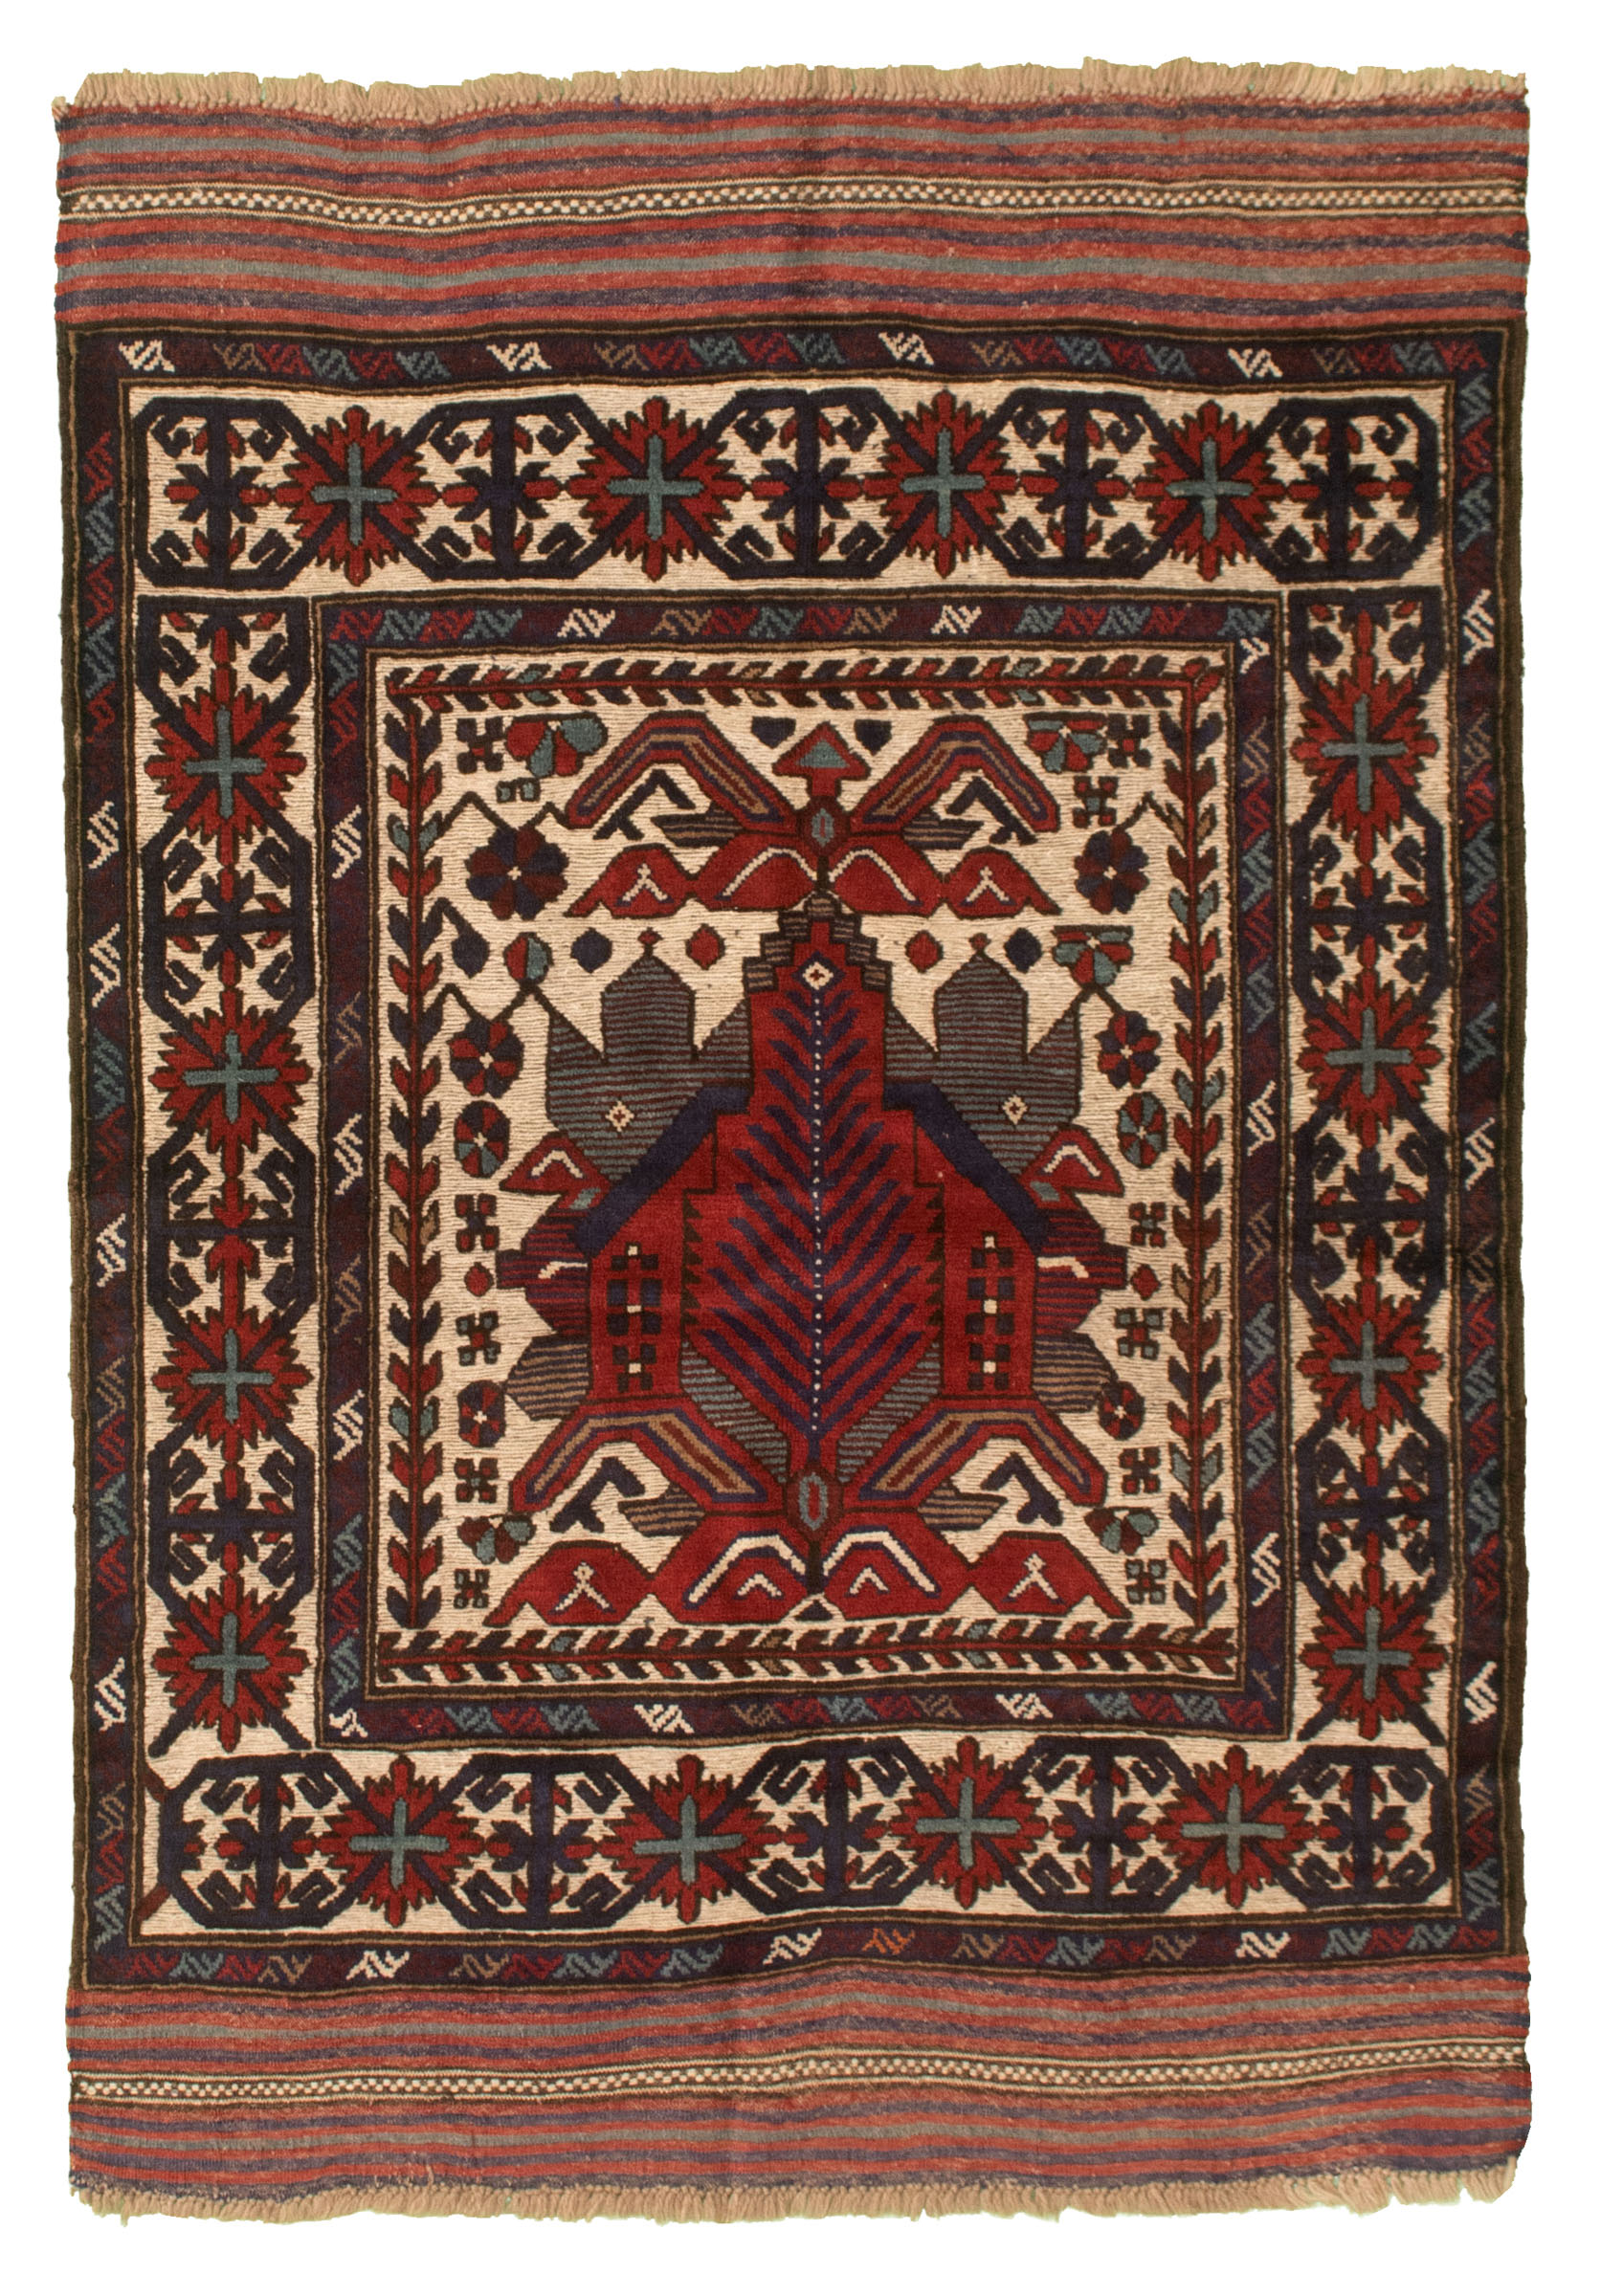 Hand-Knotted Wool Rug Tajik Caucasian Bordered Ivory Rug 4'2 x 6'1 eCarpet Gallery Area Rug for Living Room Bedroom 347123 